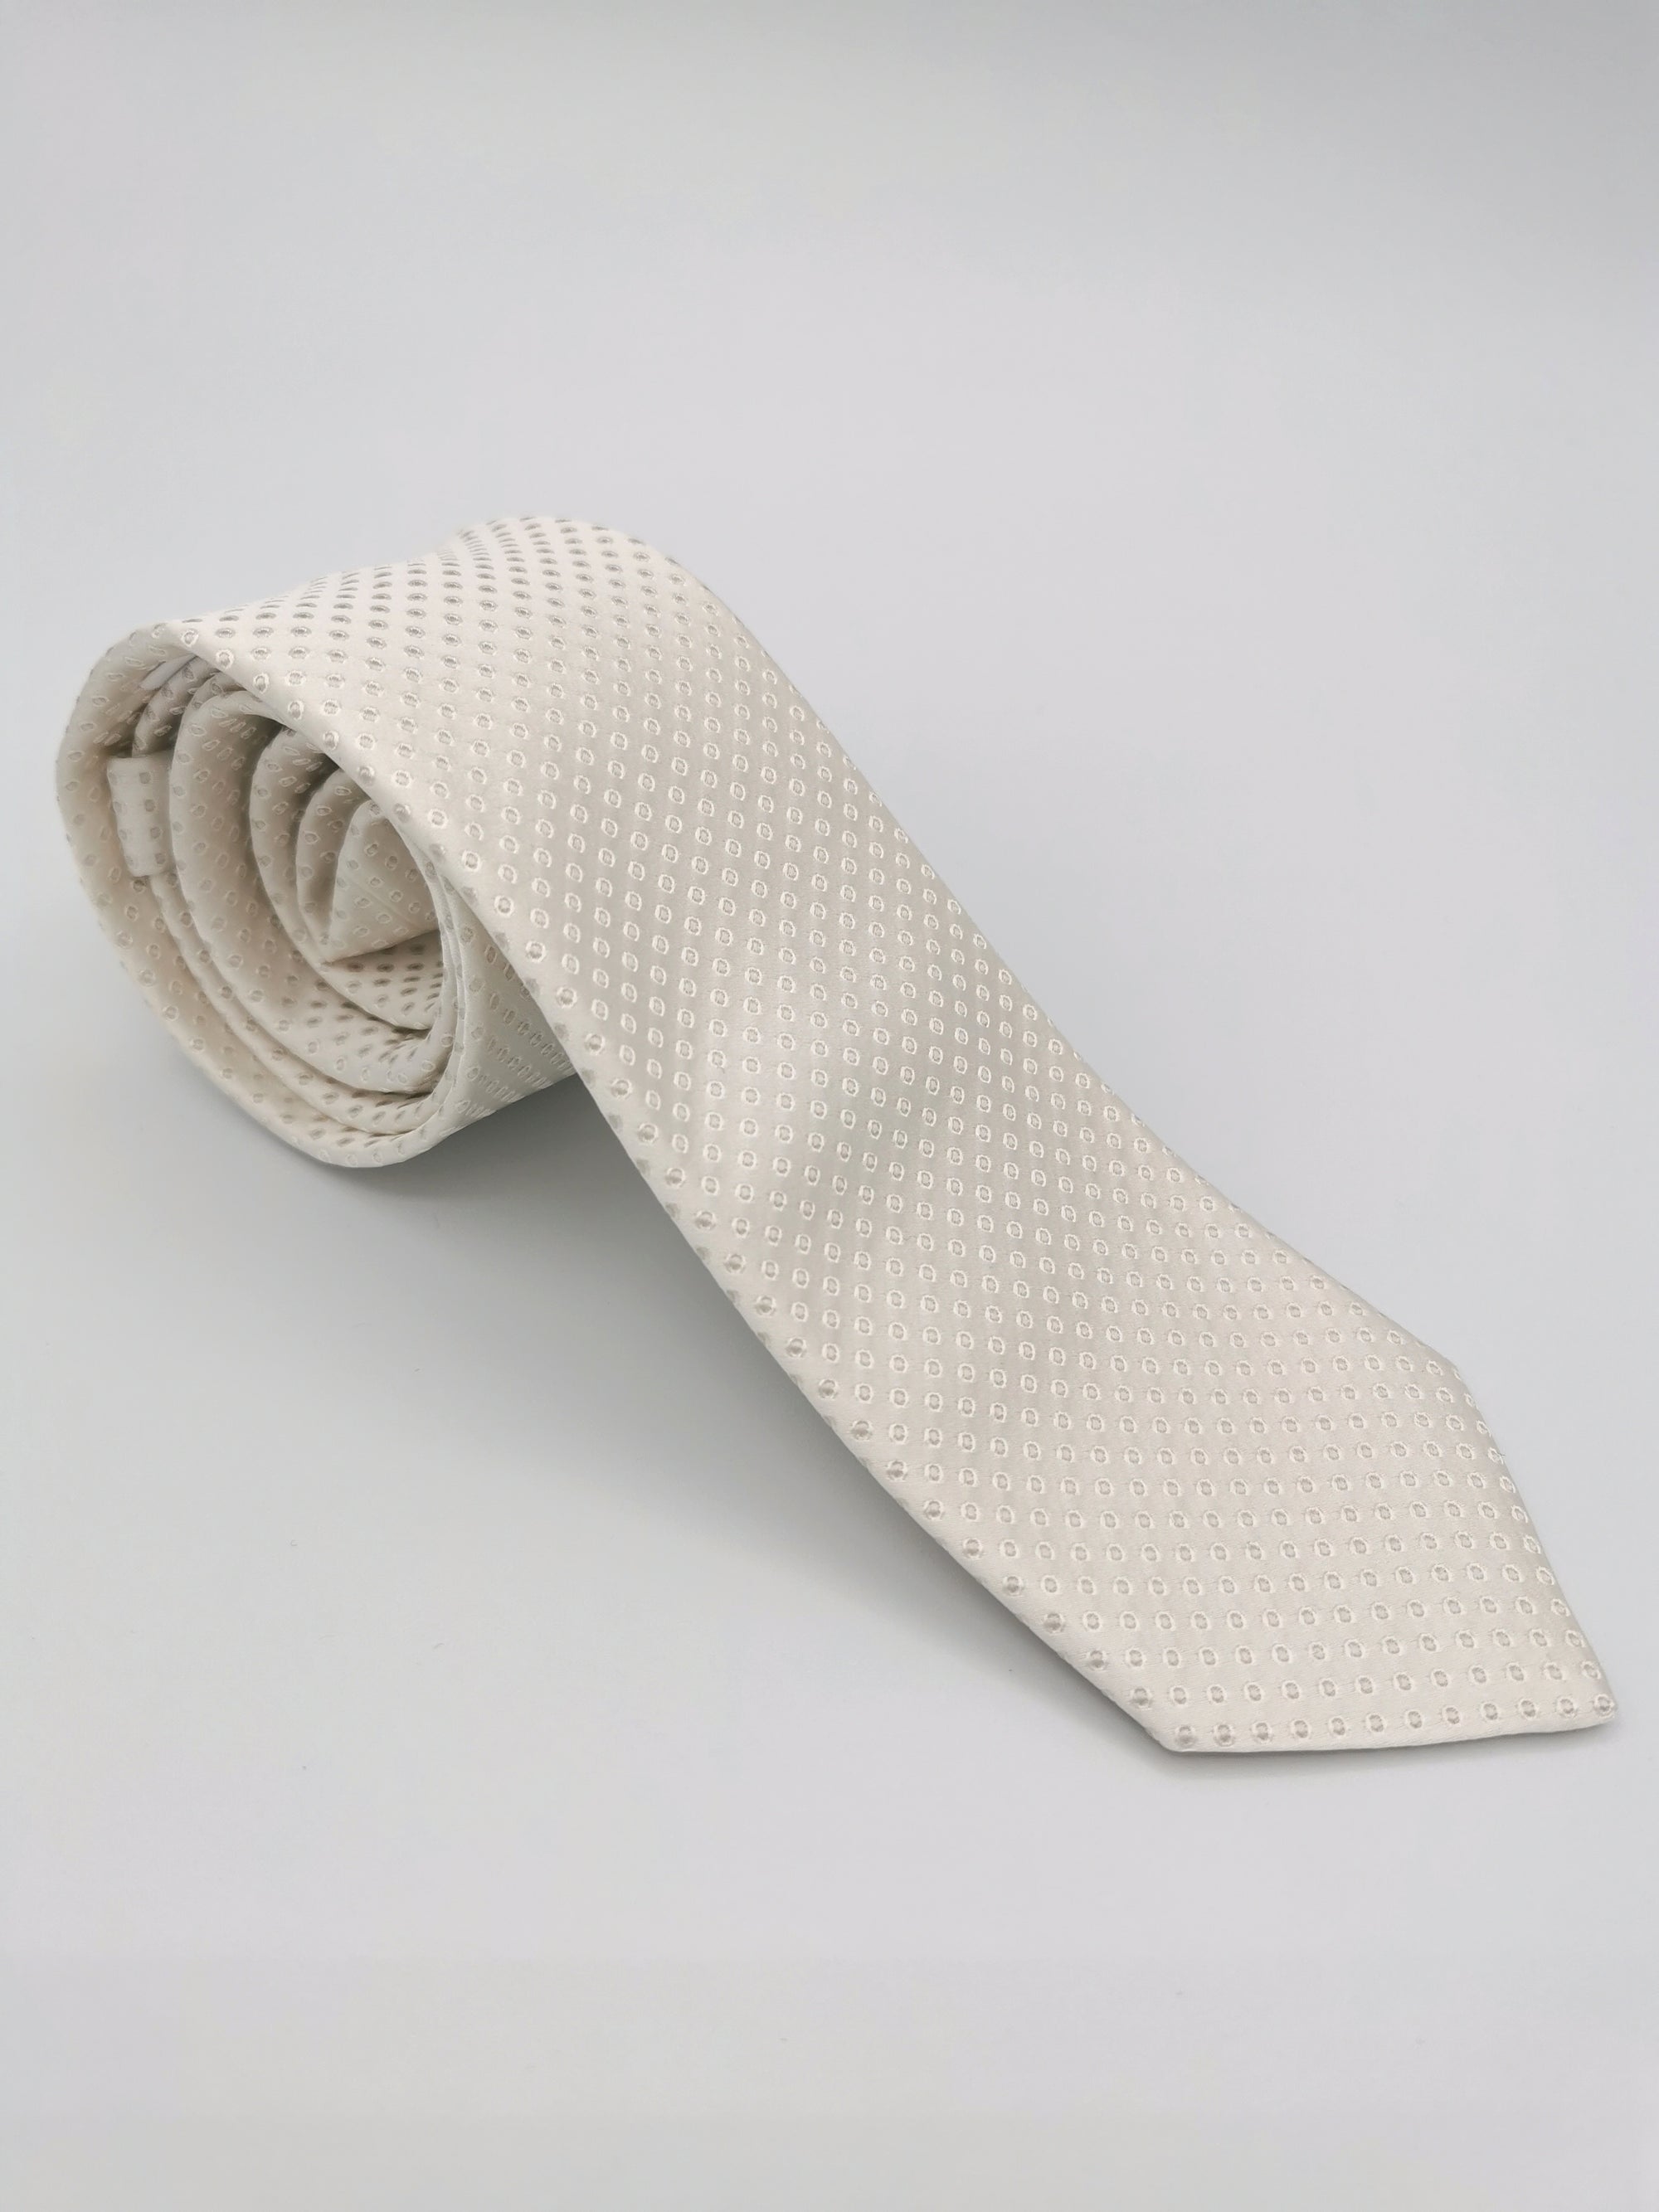 Ferala ivory silk tie with polka dot pattern